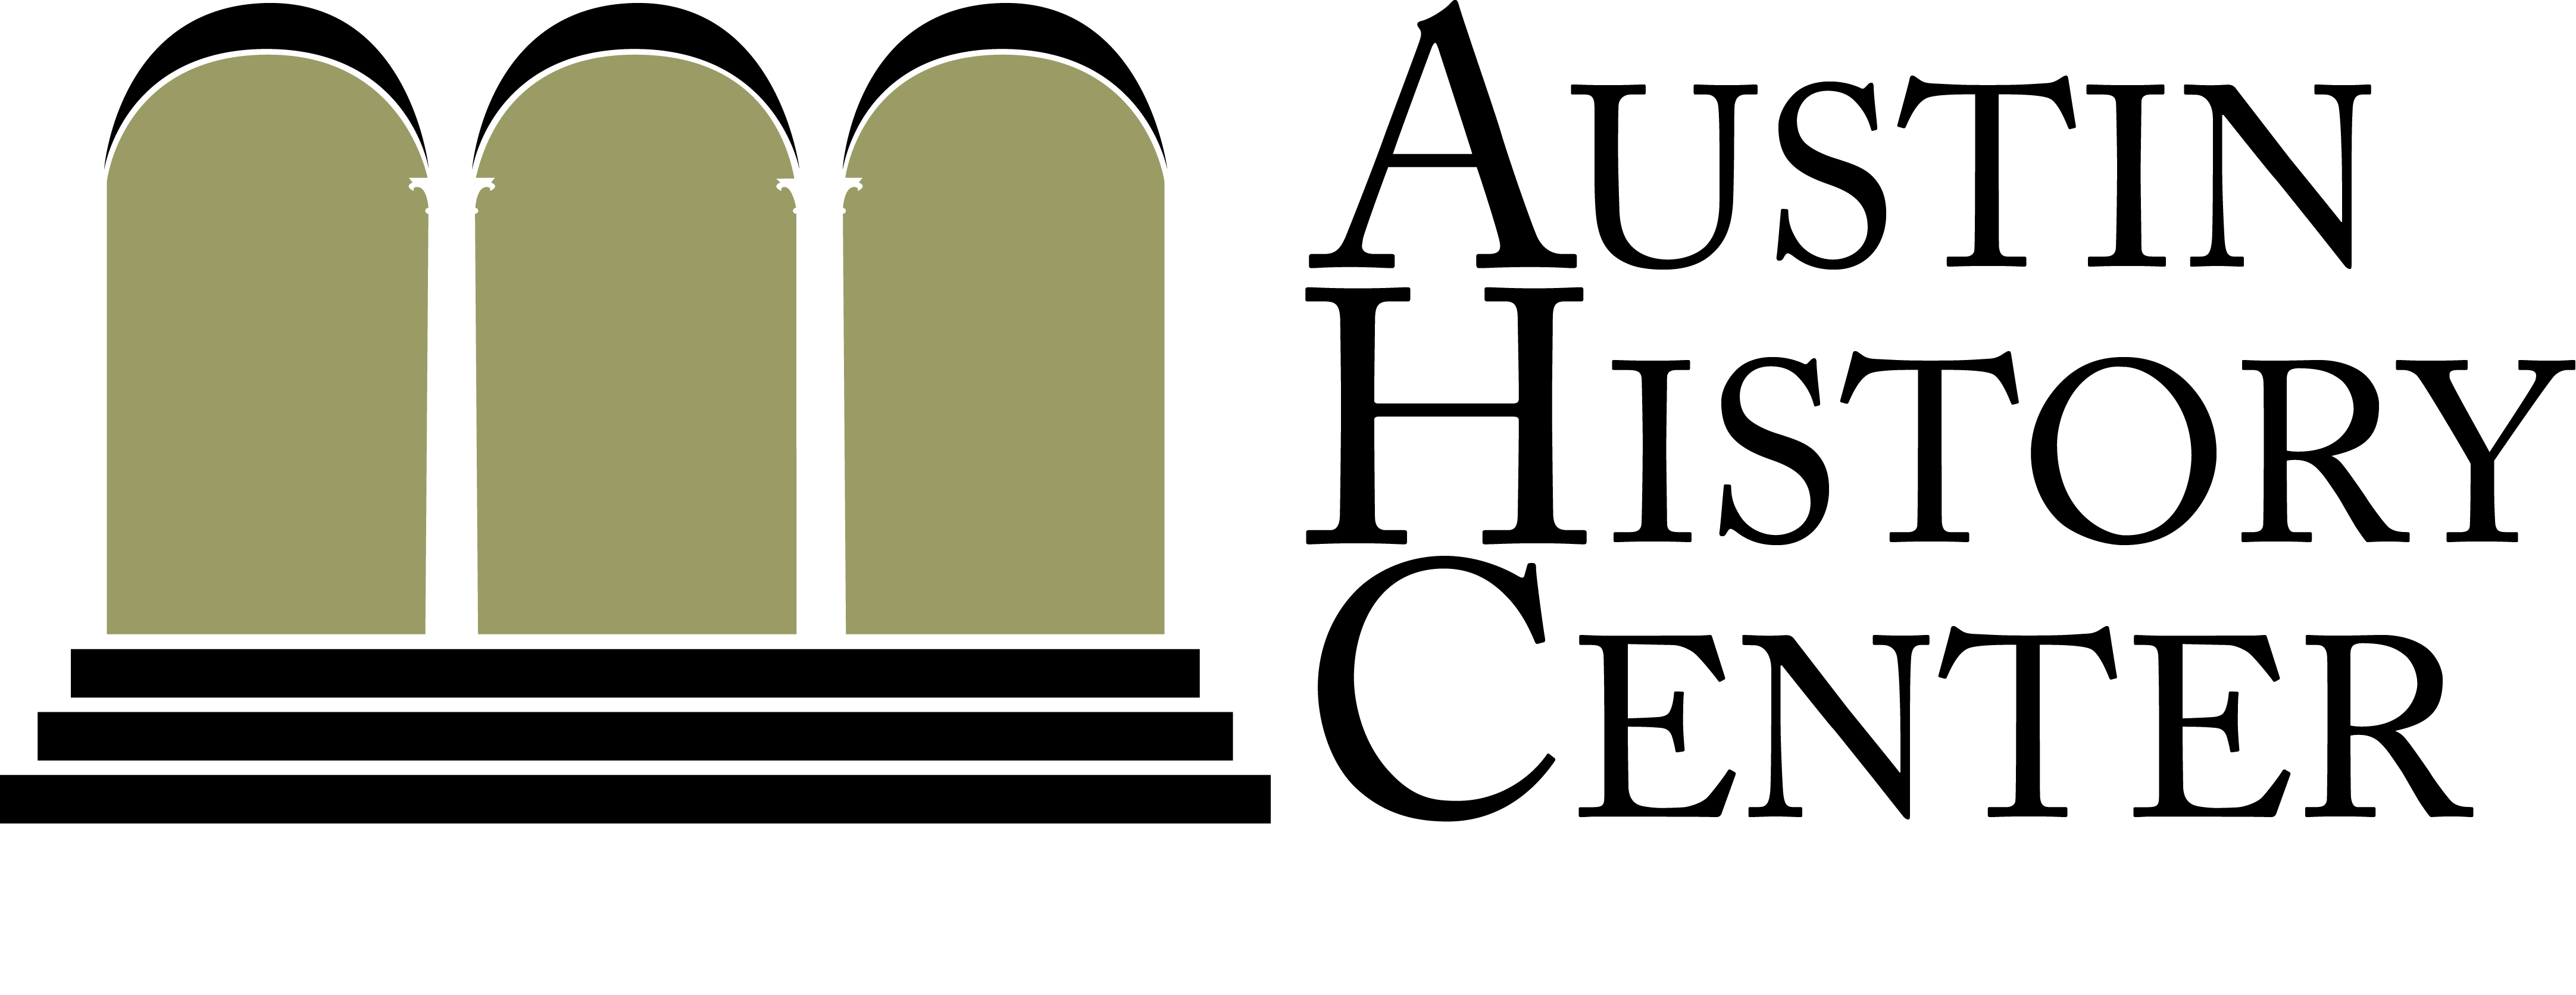 logo of Austin History Center, showing 3 archways